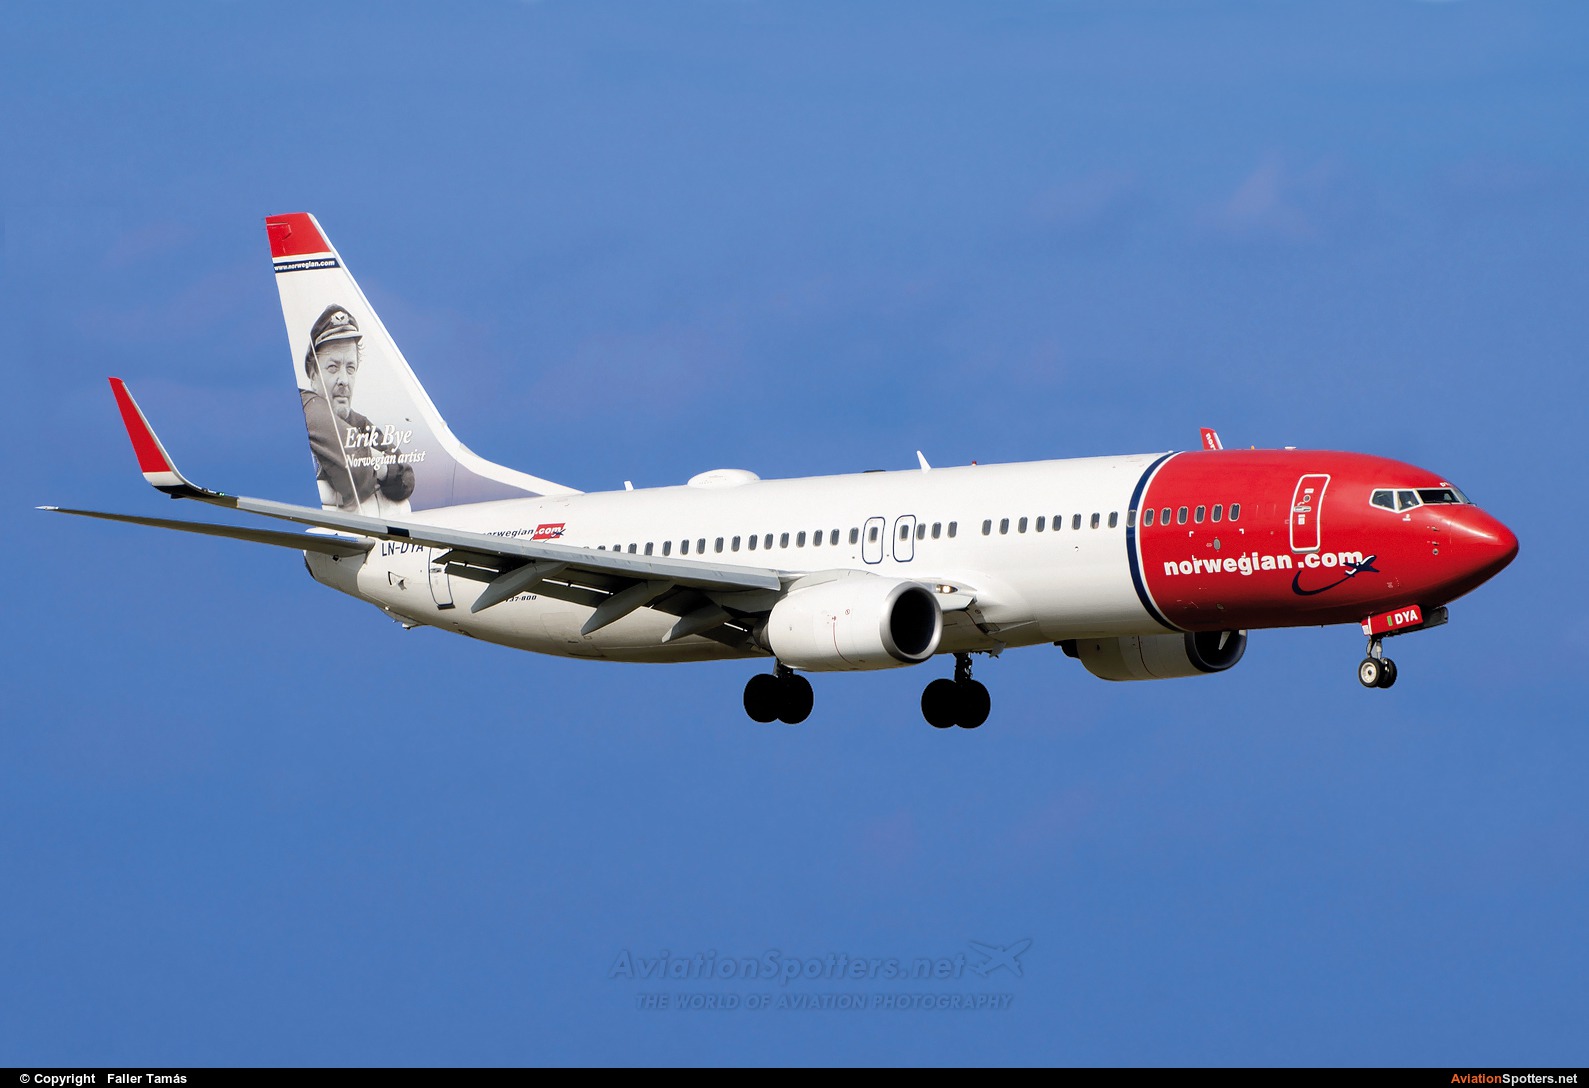 Norwegian Air Shuttle  -  737-800  (LN-DYA) By Faller Tamás (fallto78)